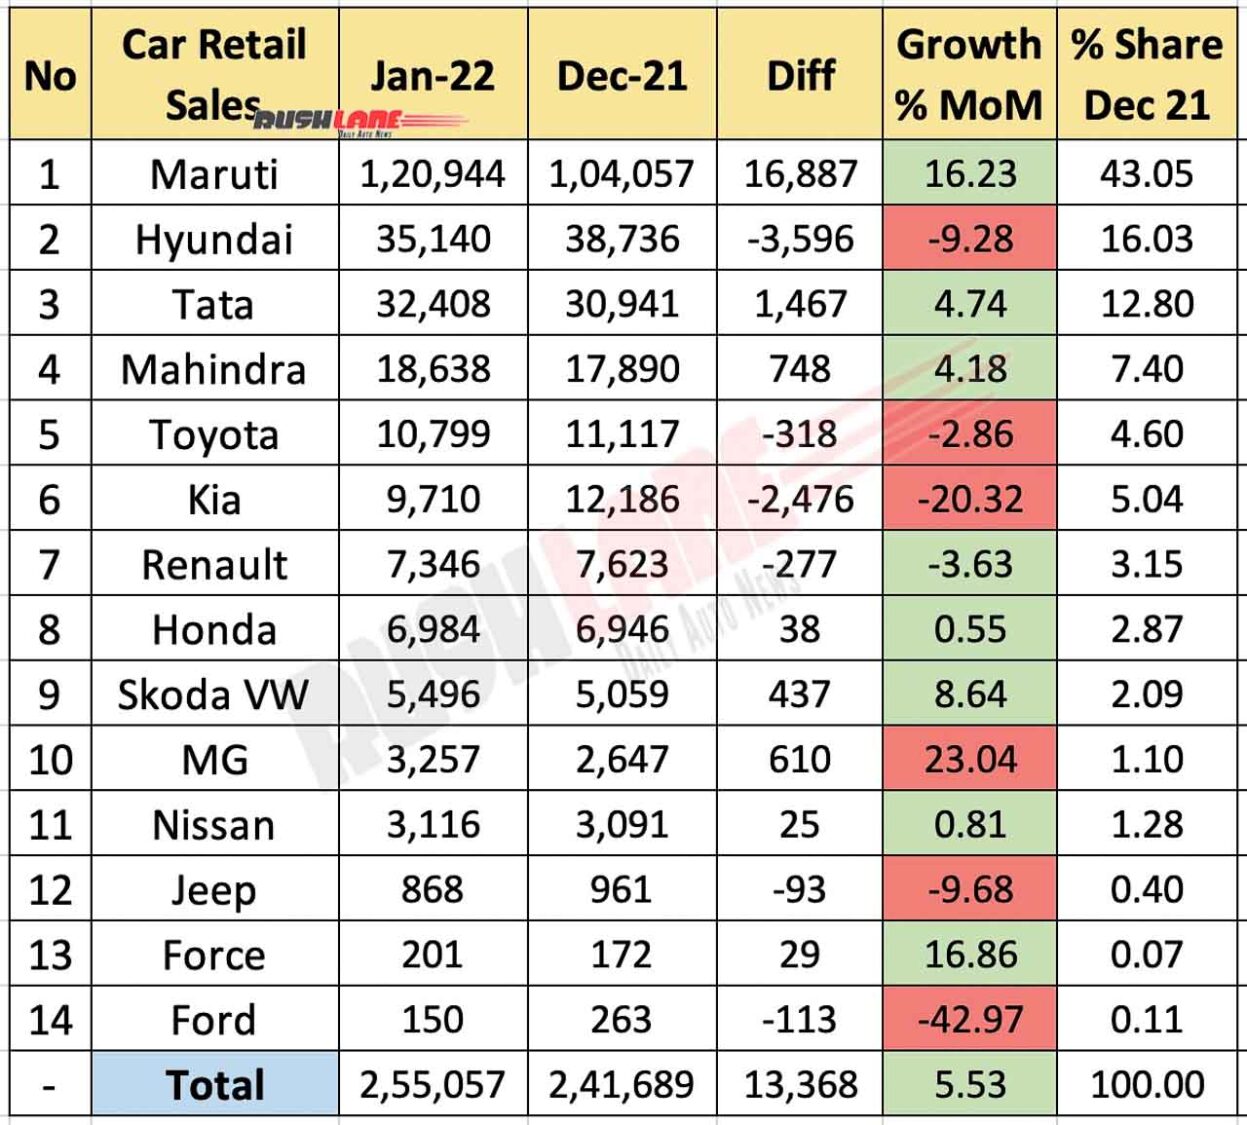 Car Retail Sales Jan 2022 vs Dec 2021 (MoM)